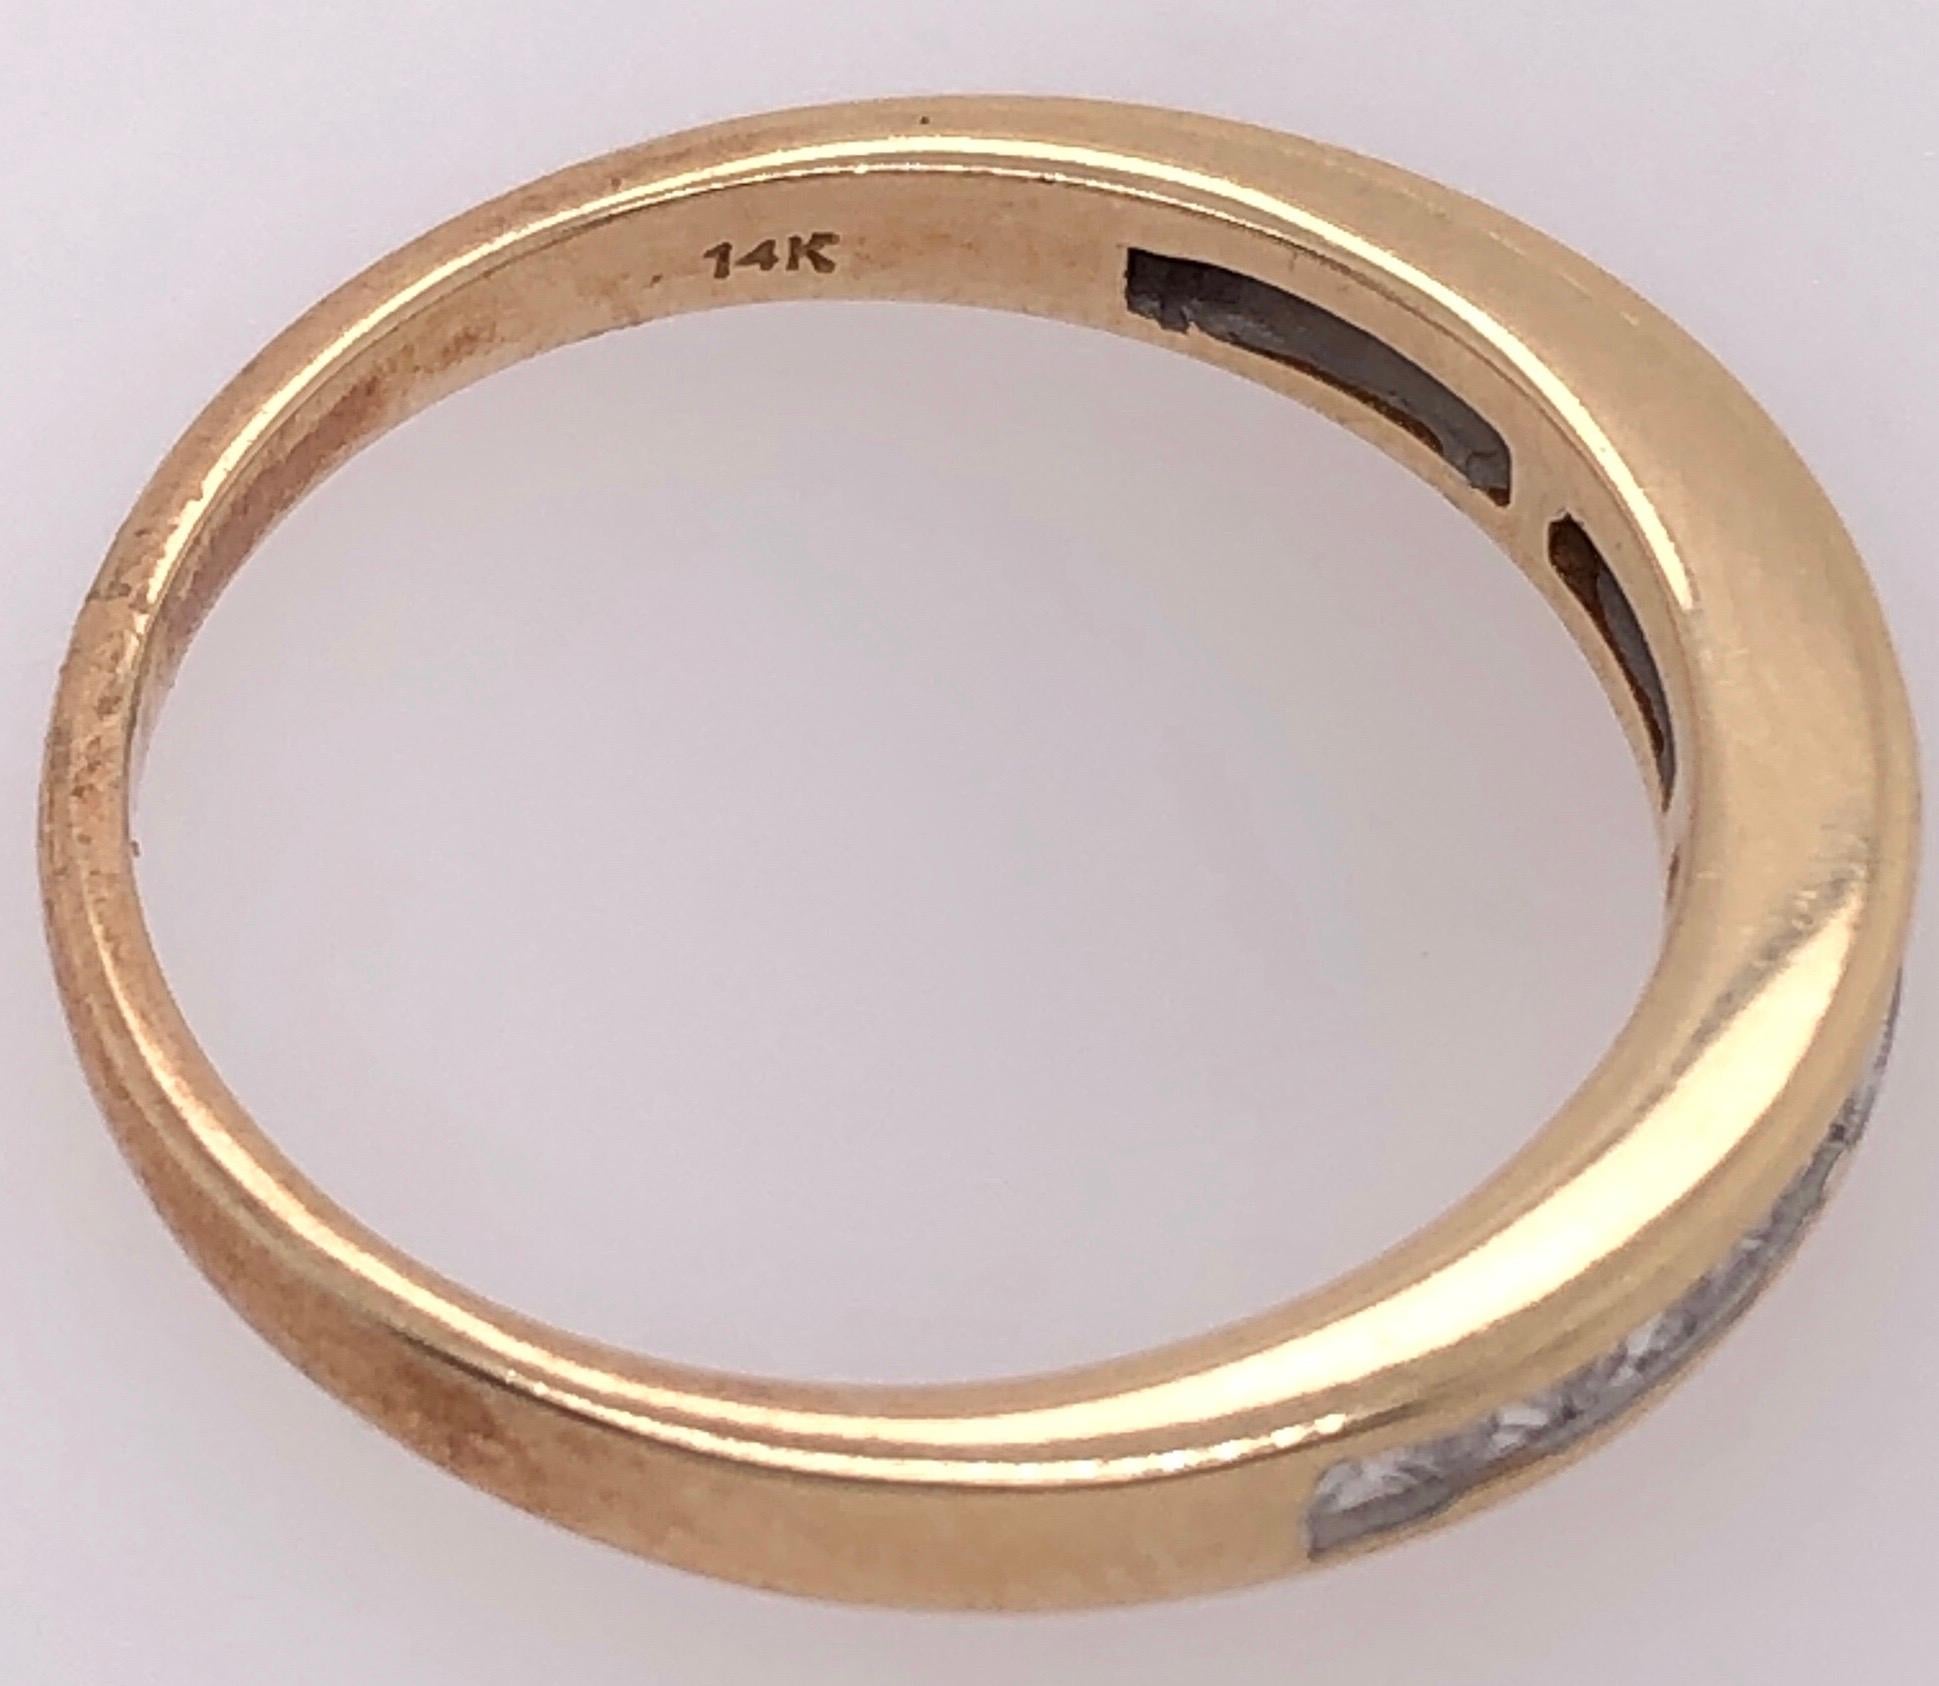 14 Karat Yellow Gold Band / Wedding Ring with Diamonds 0.45 Total Diamond Weight.
Size 7 
3 grams total weight.
